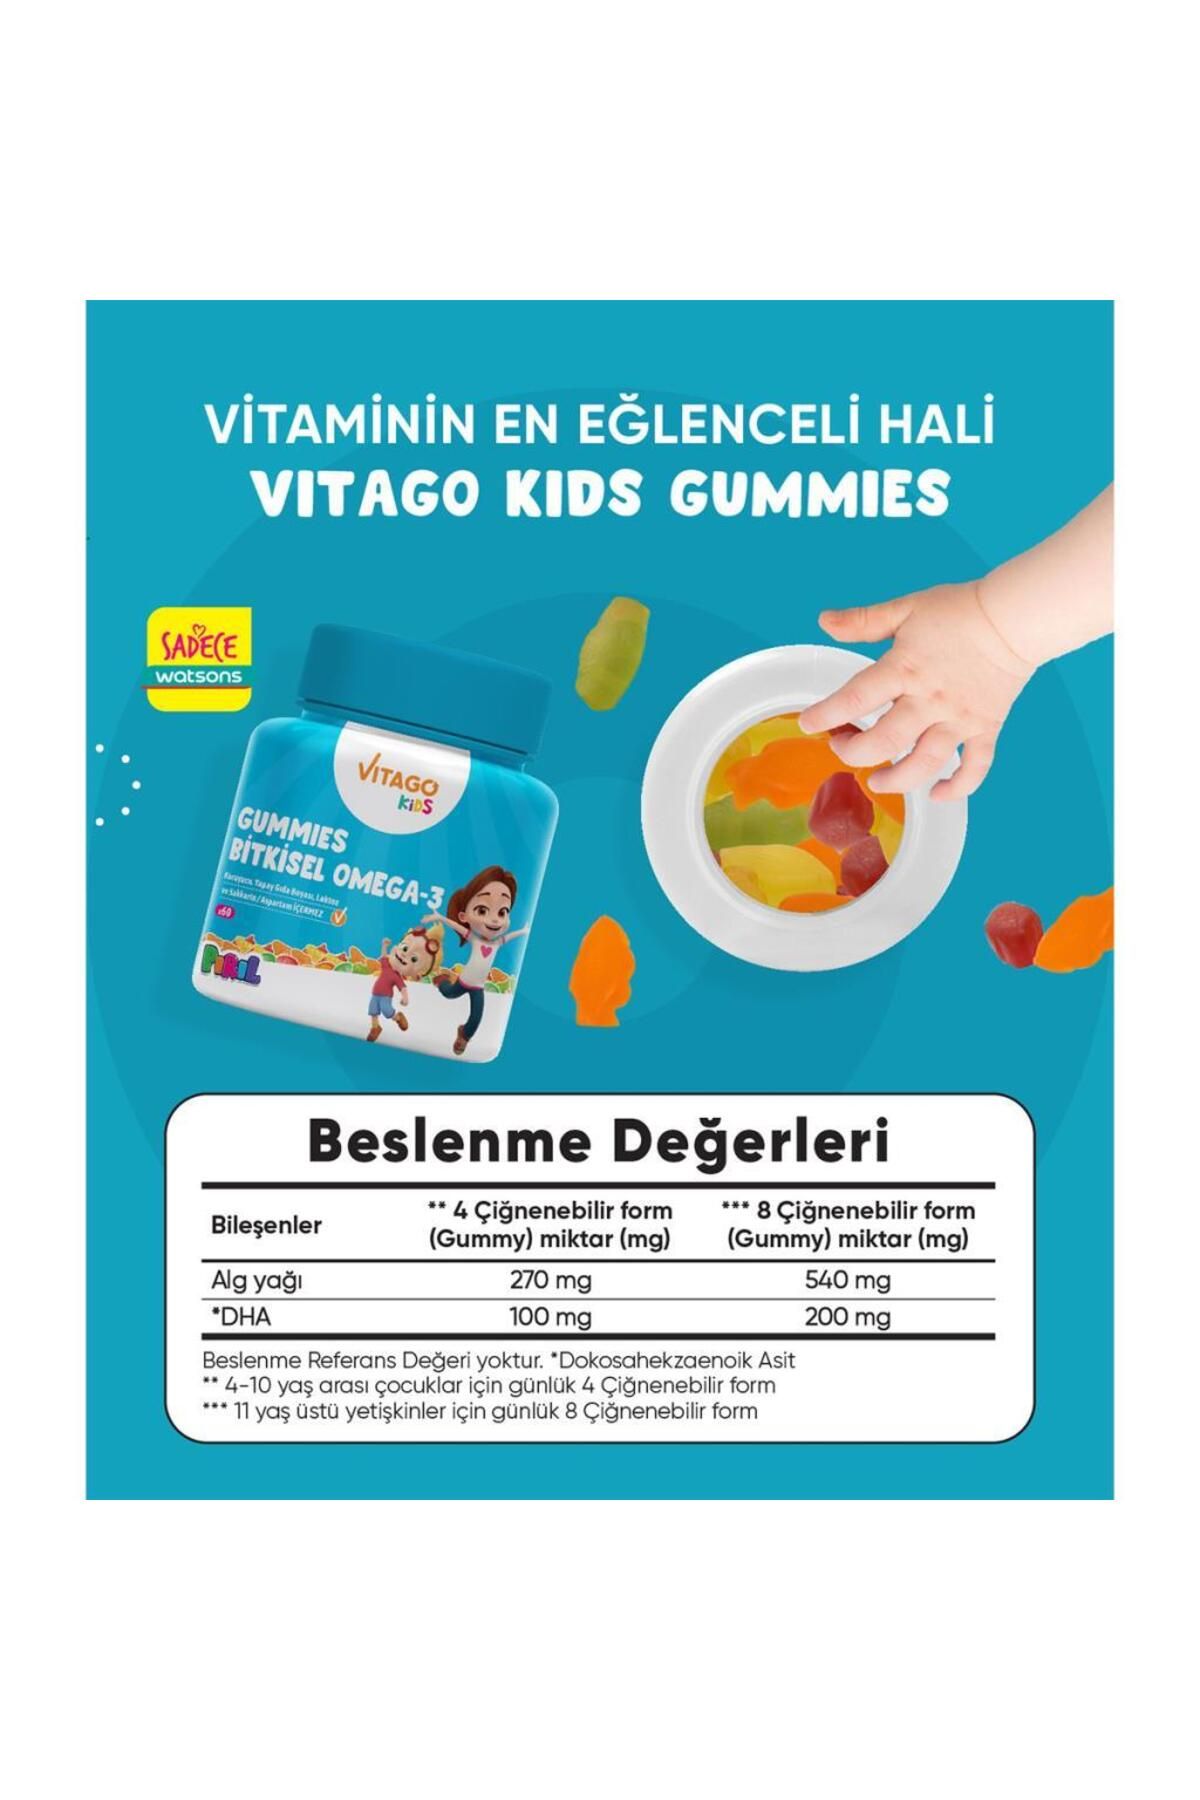 Vitago گمی های امگا ۳ گیاهی جذاب ویتاگو کودکان ۶۰ عددی